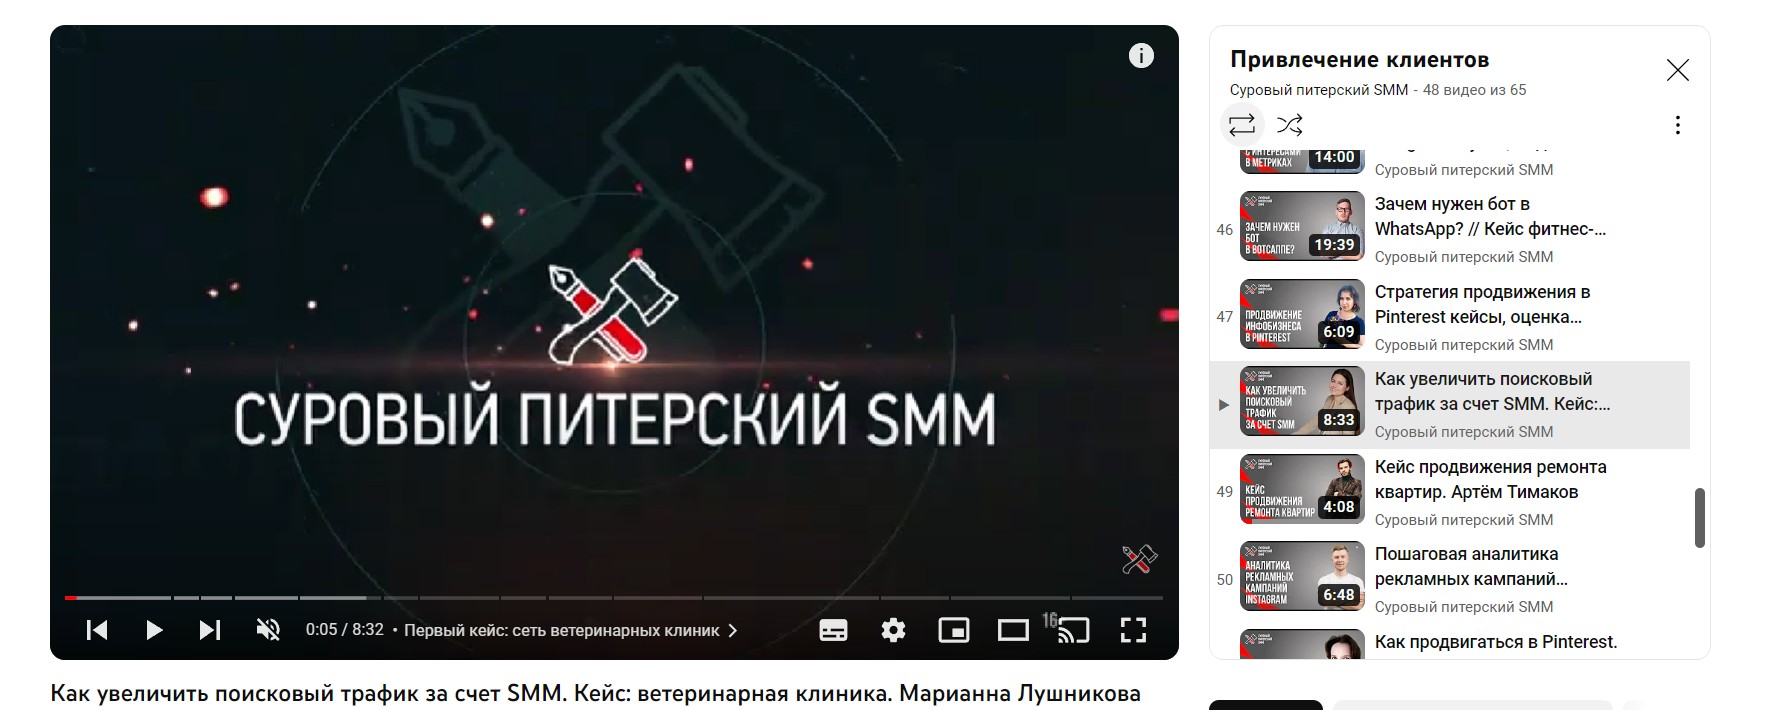 Youtube-канал Суровый питерский SMM